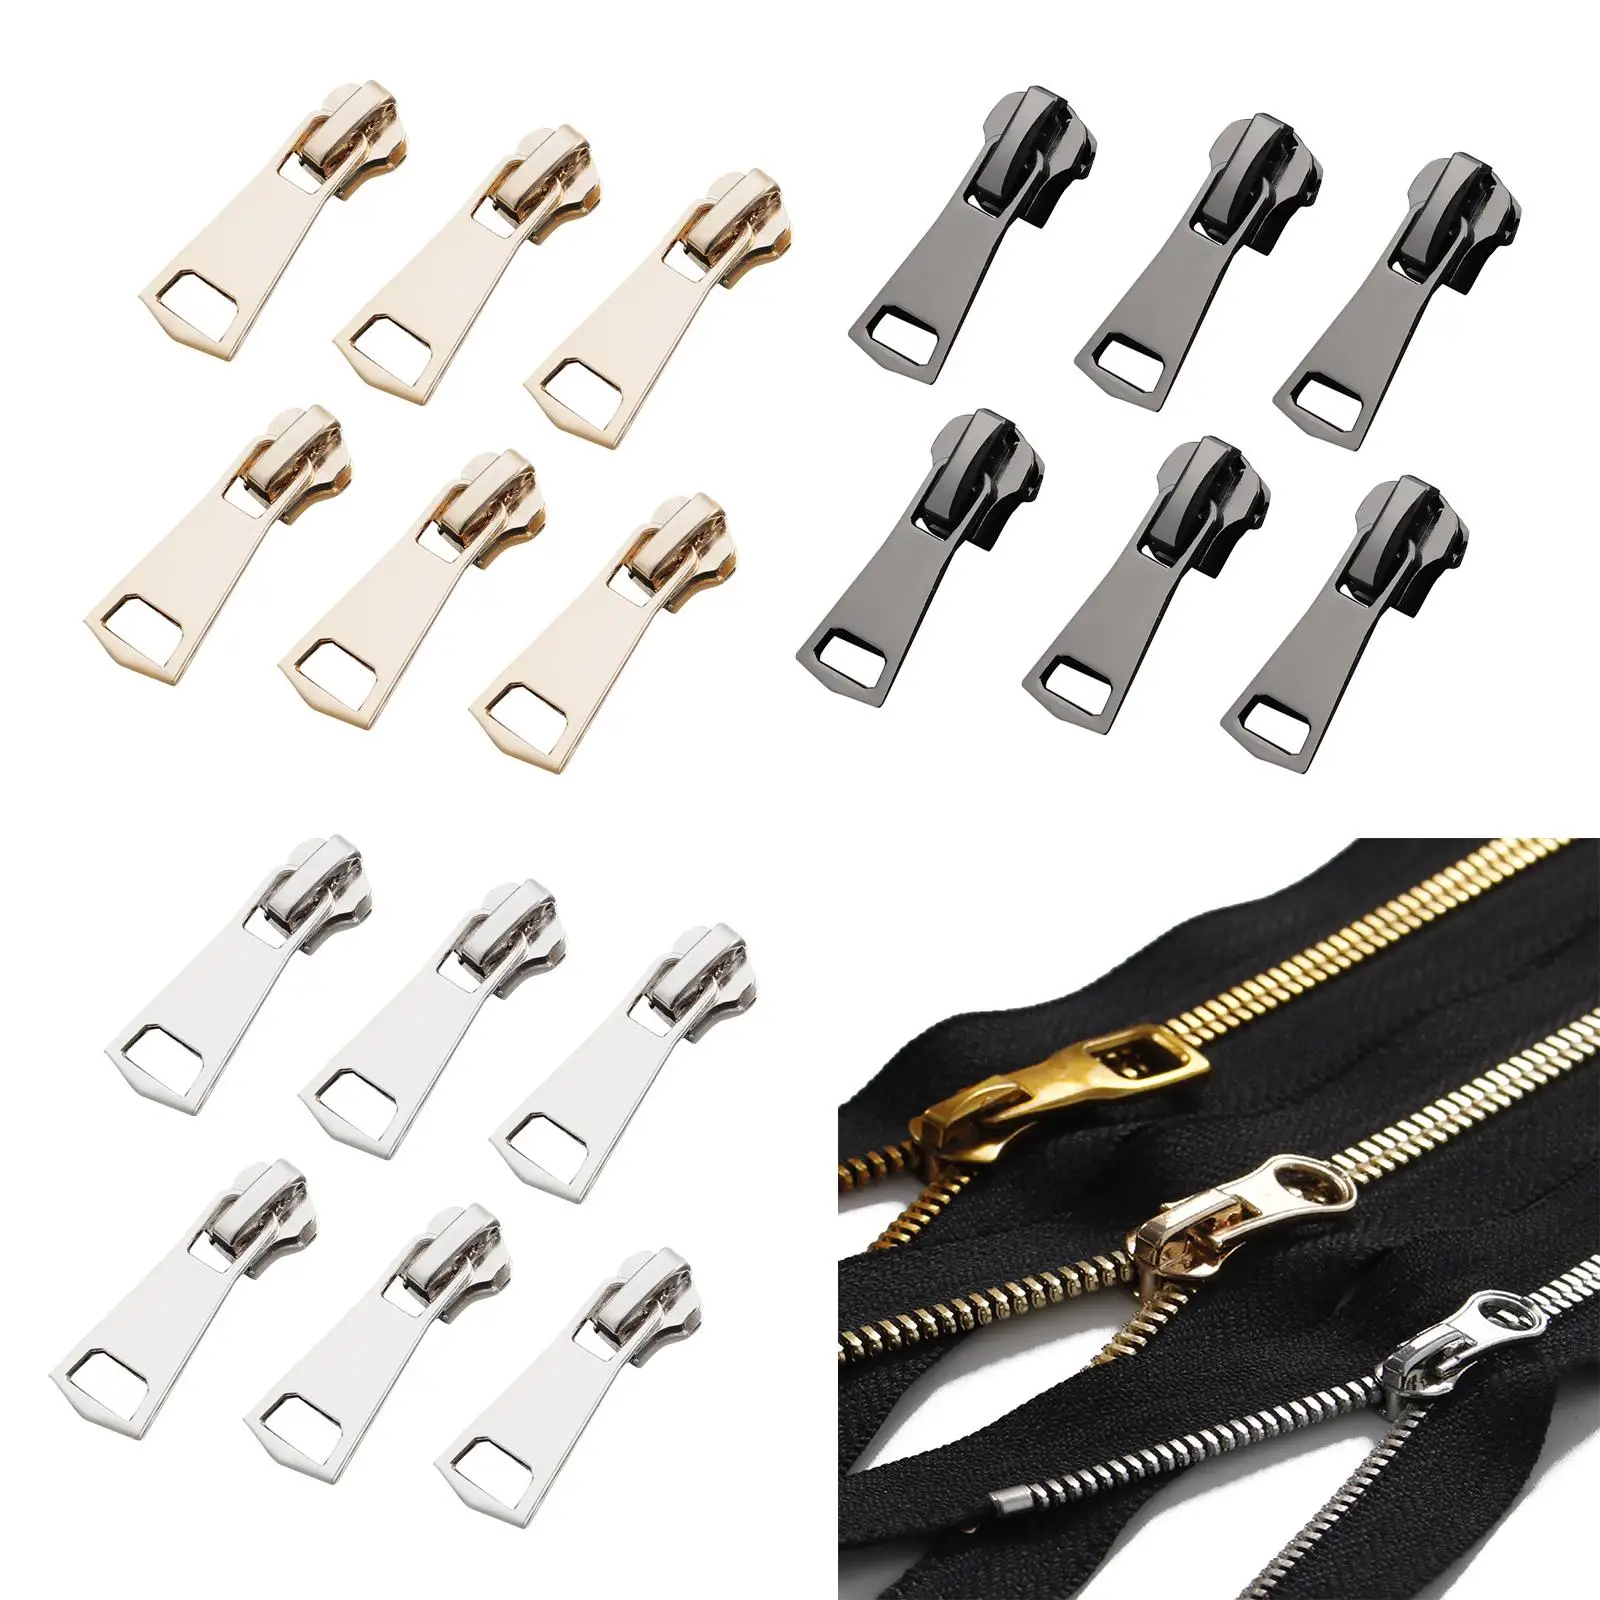 6Pcs Metal Universal Zipper Repair Kit Instant Zipper Pull Zip Slider Antirust Sewing Clothes for Repairing Coats Sleeping Bag